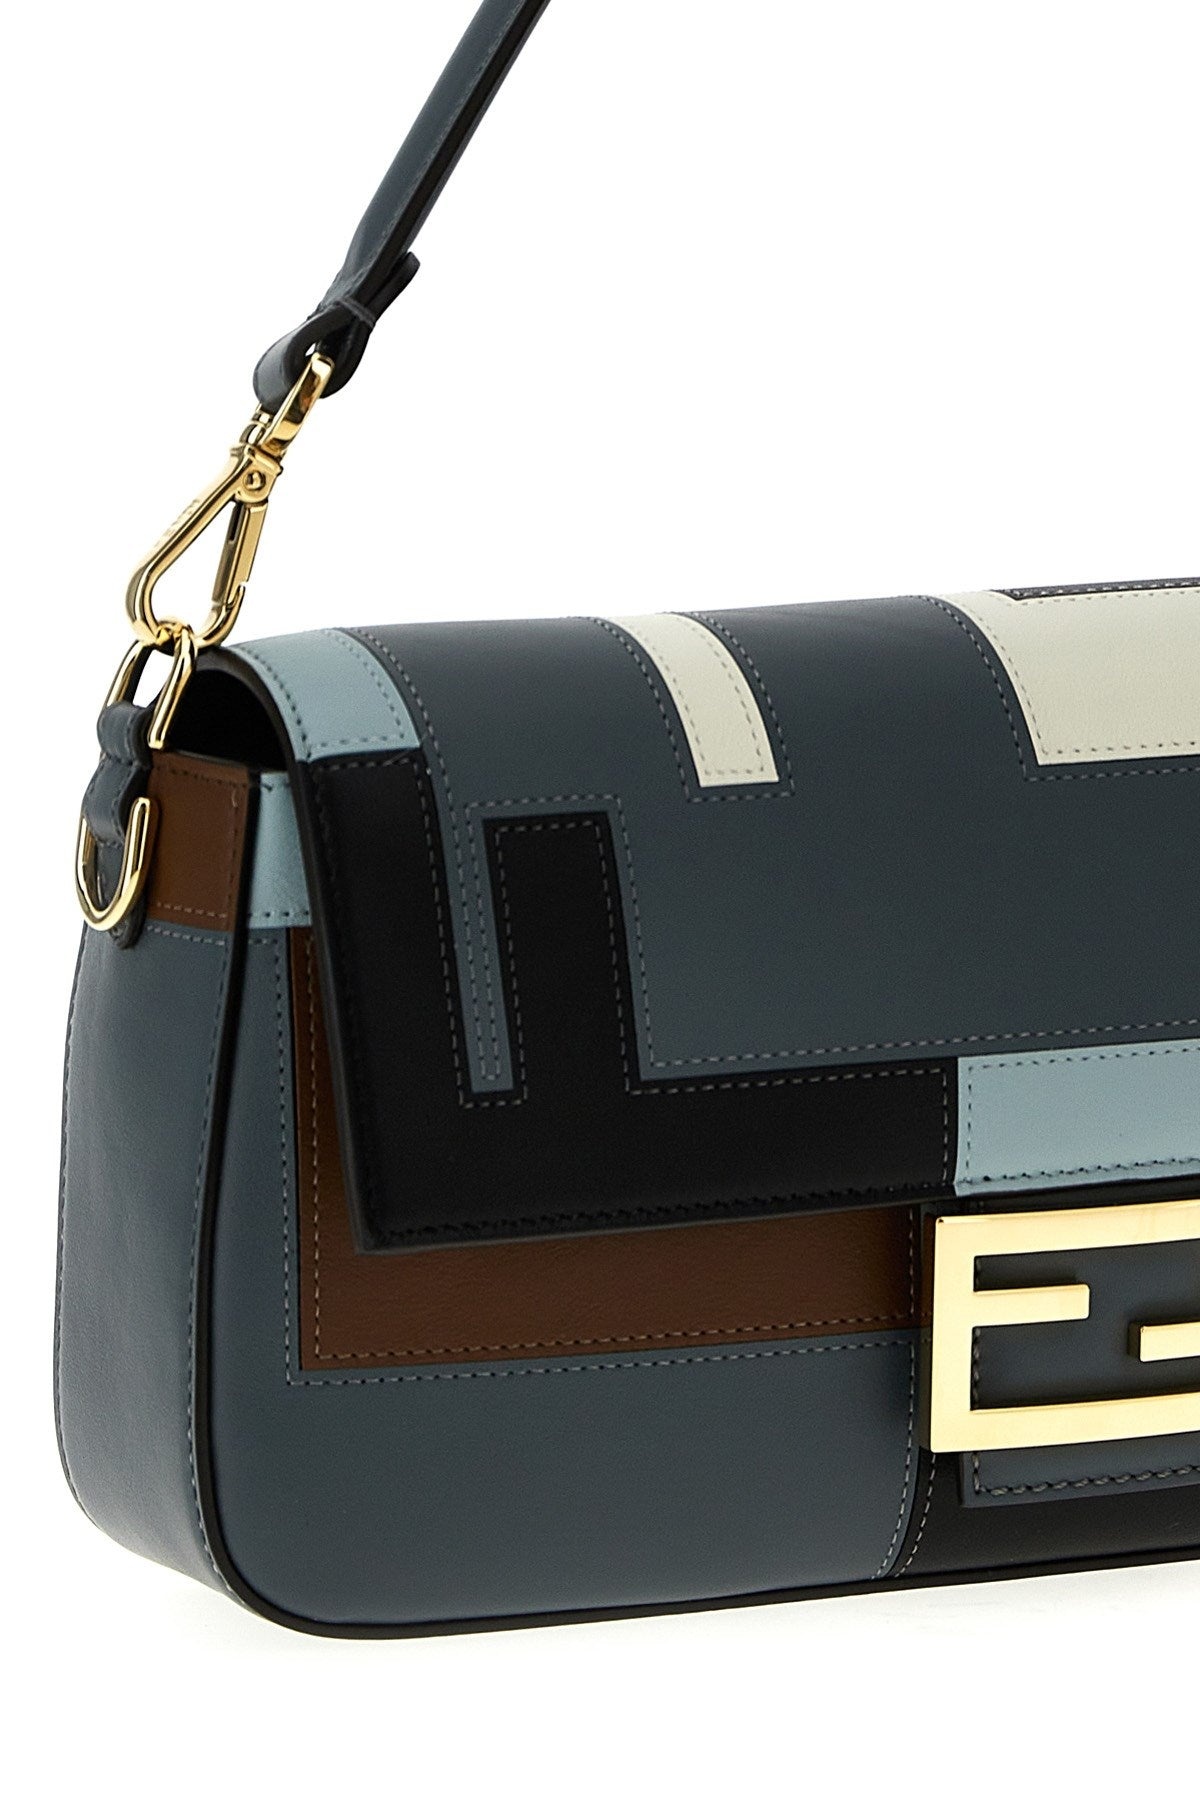 Fendi Women 'Baguette' Midi Handbag - 3